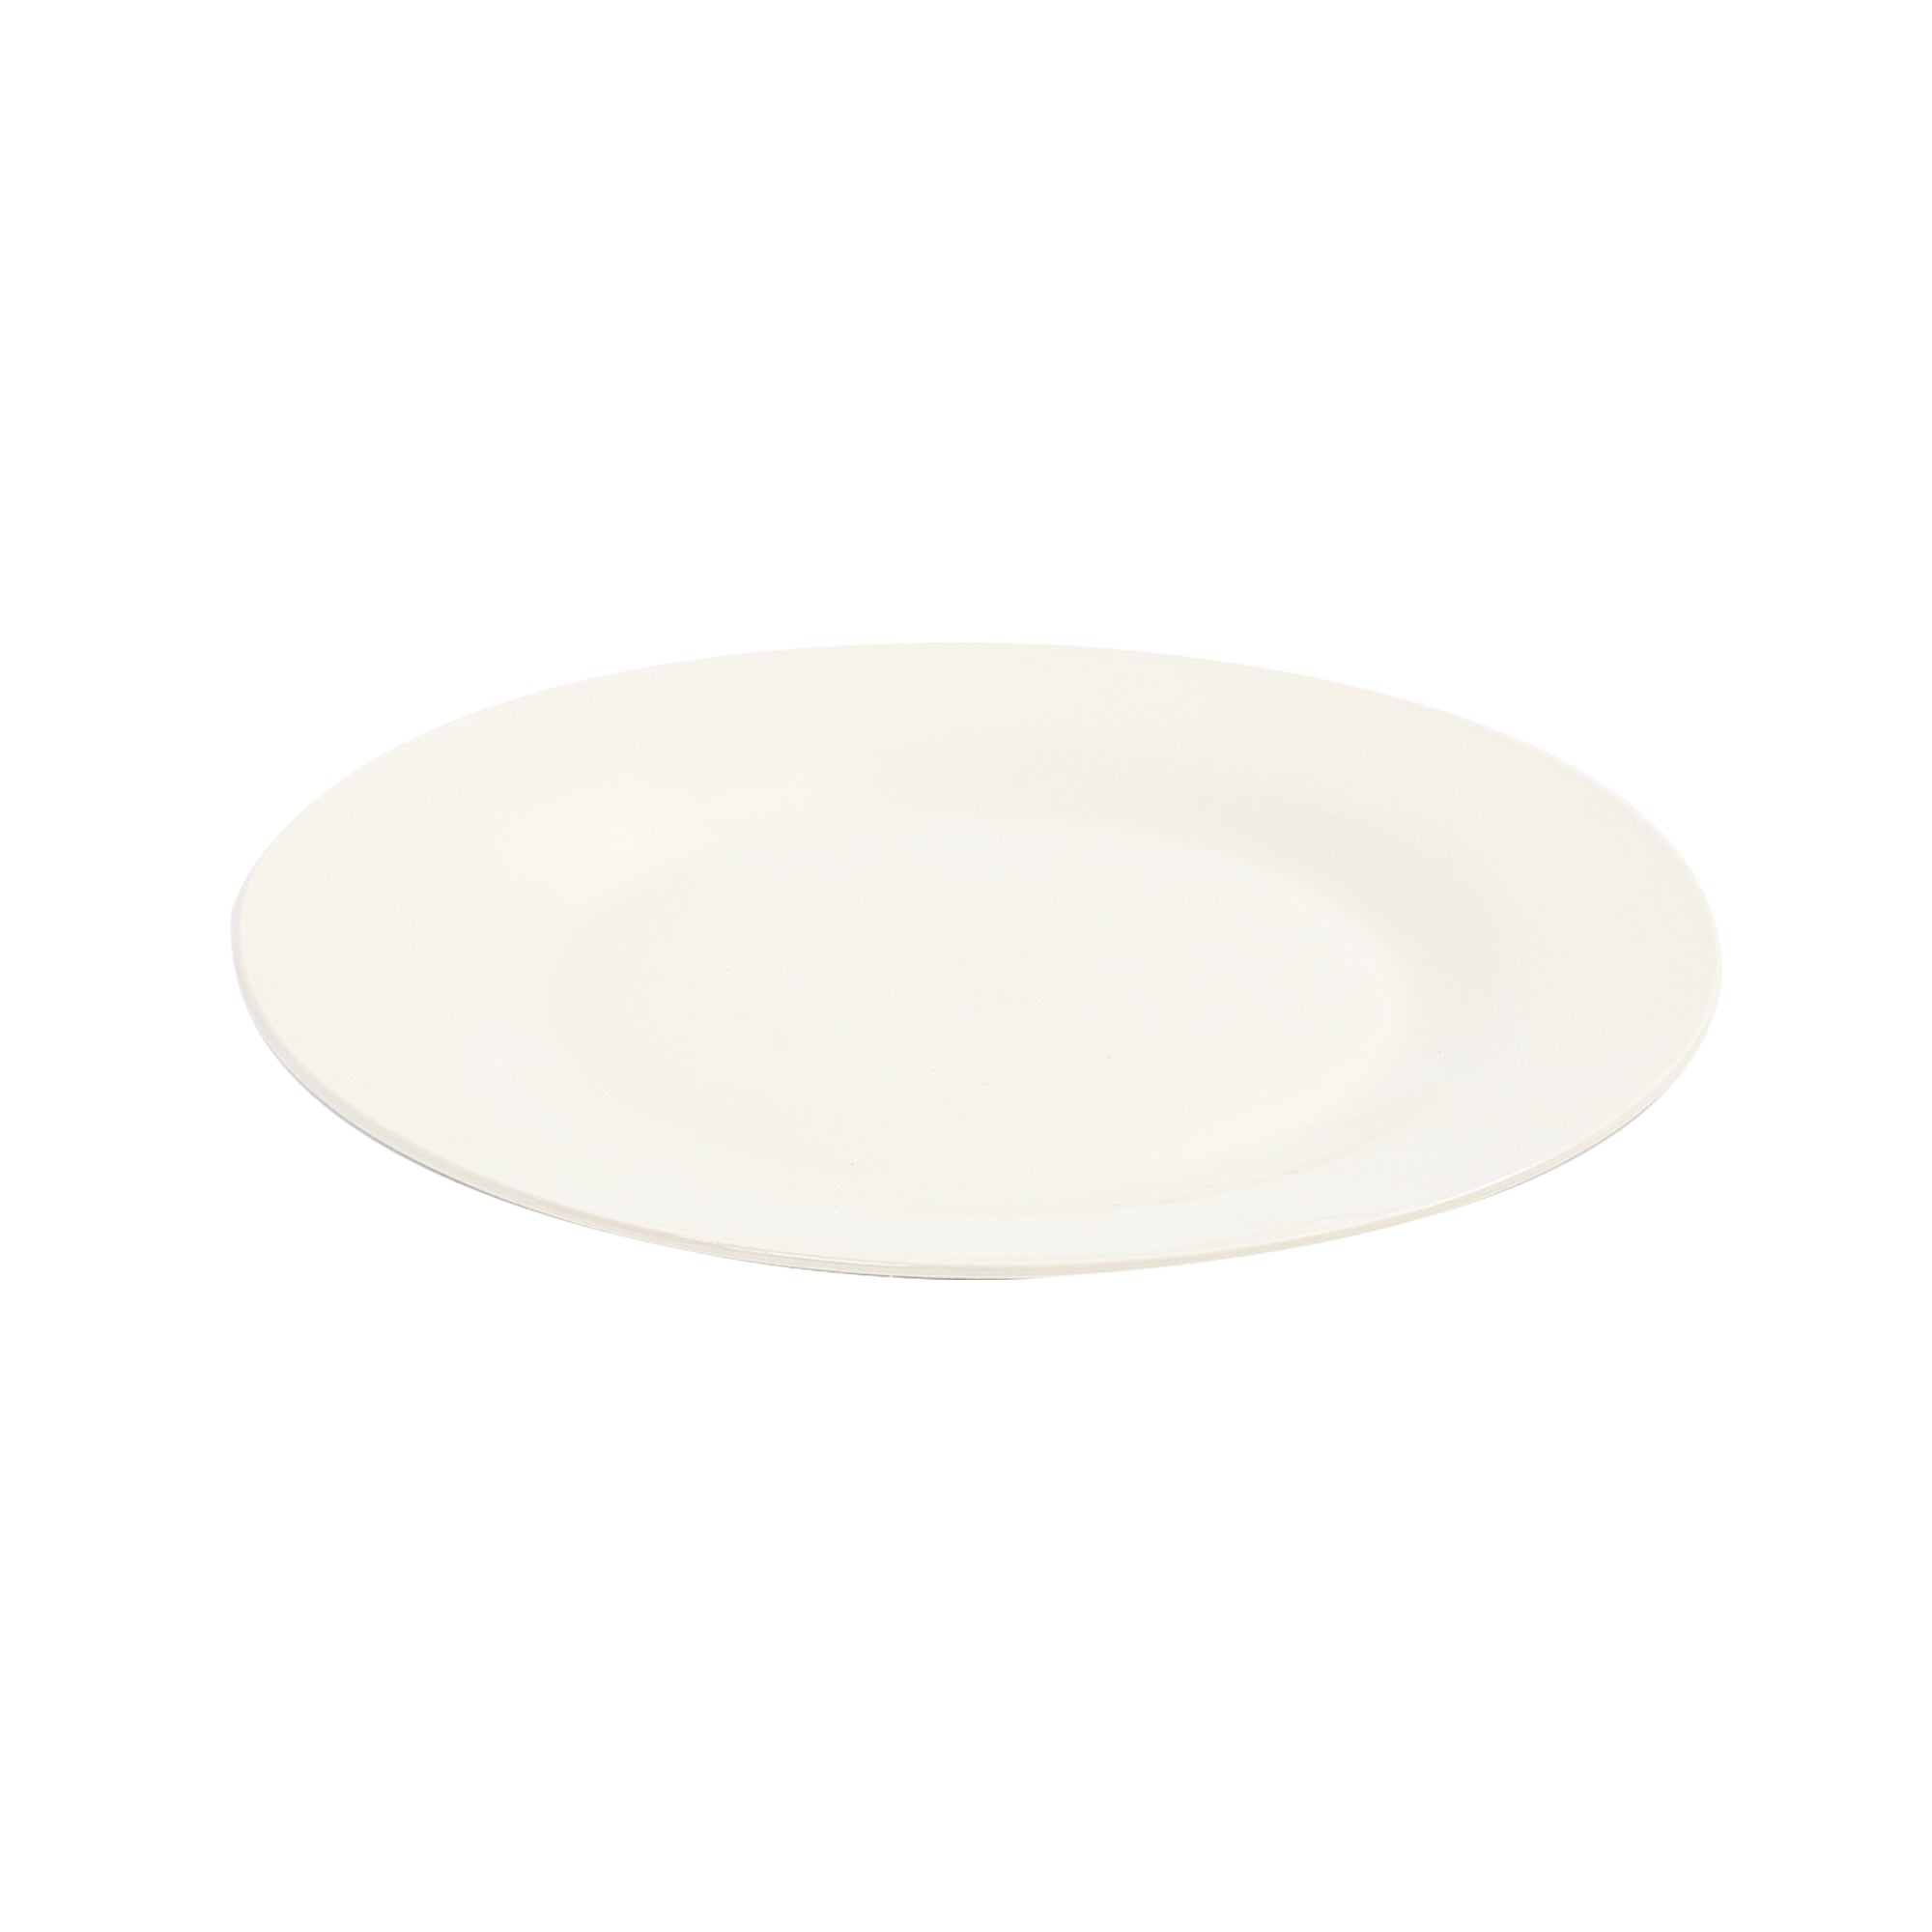 Ceramic Dinner Plate 10.5inch Round White